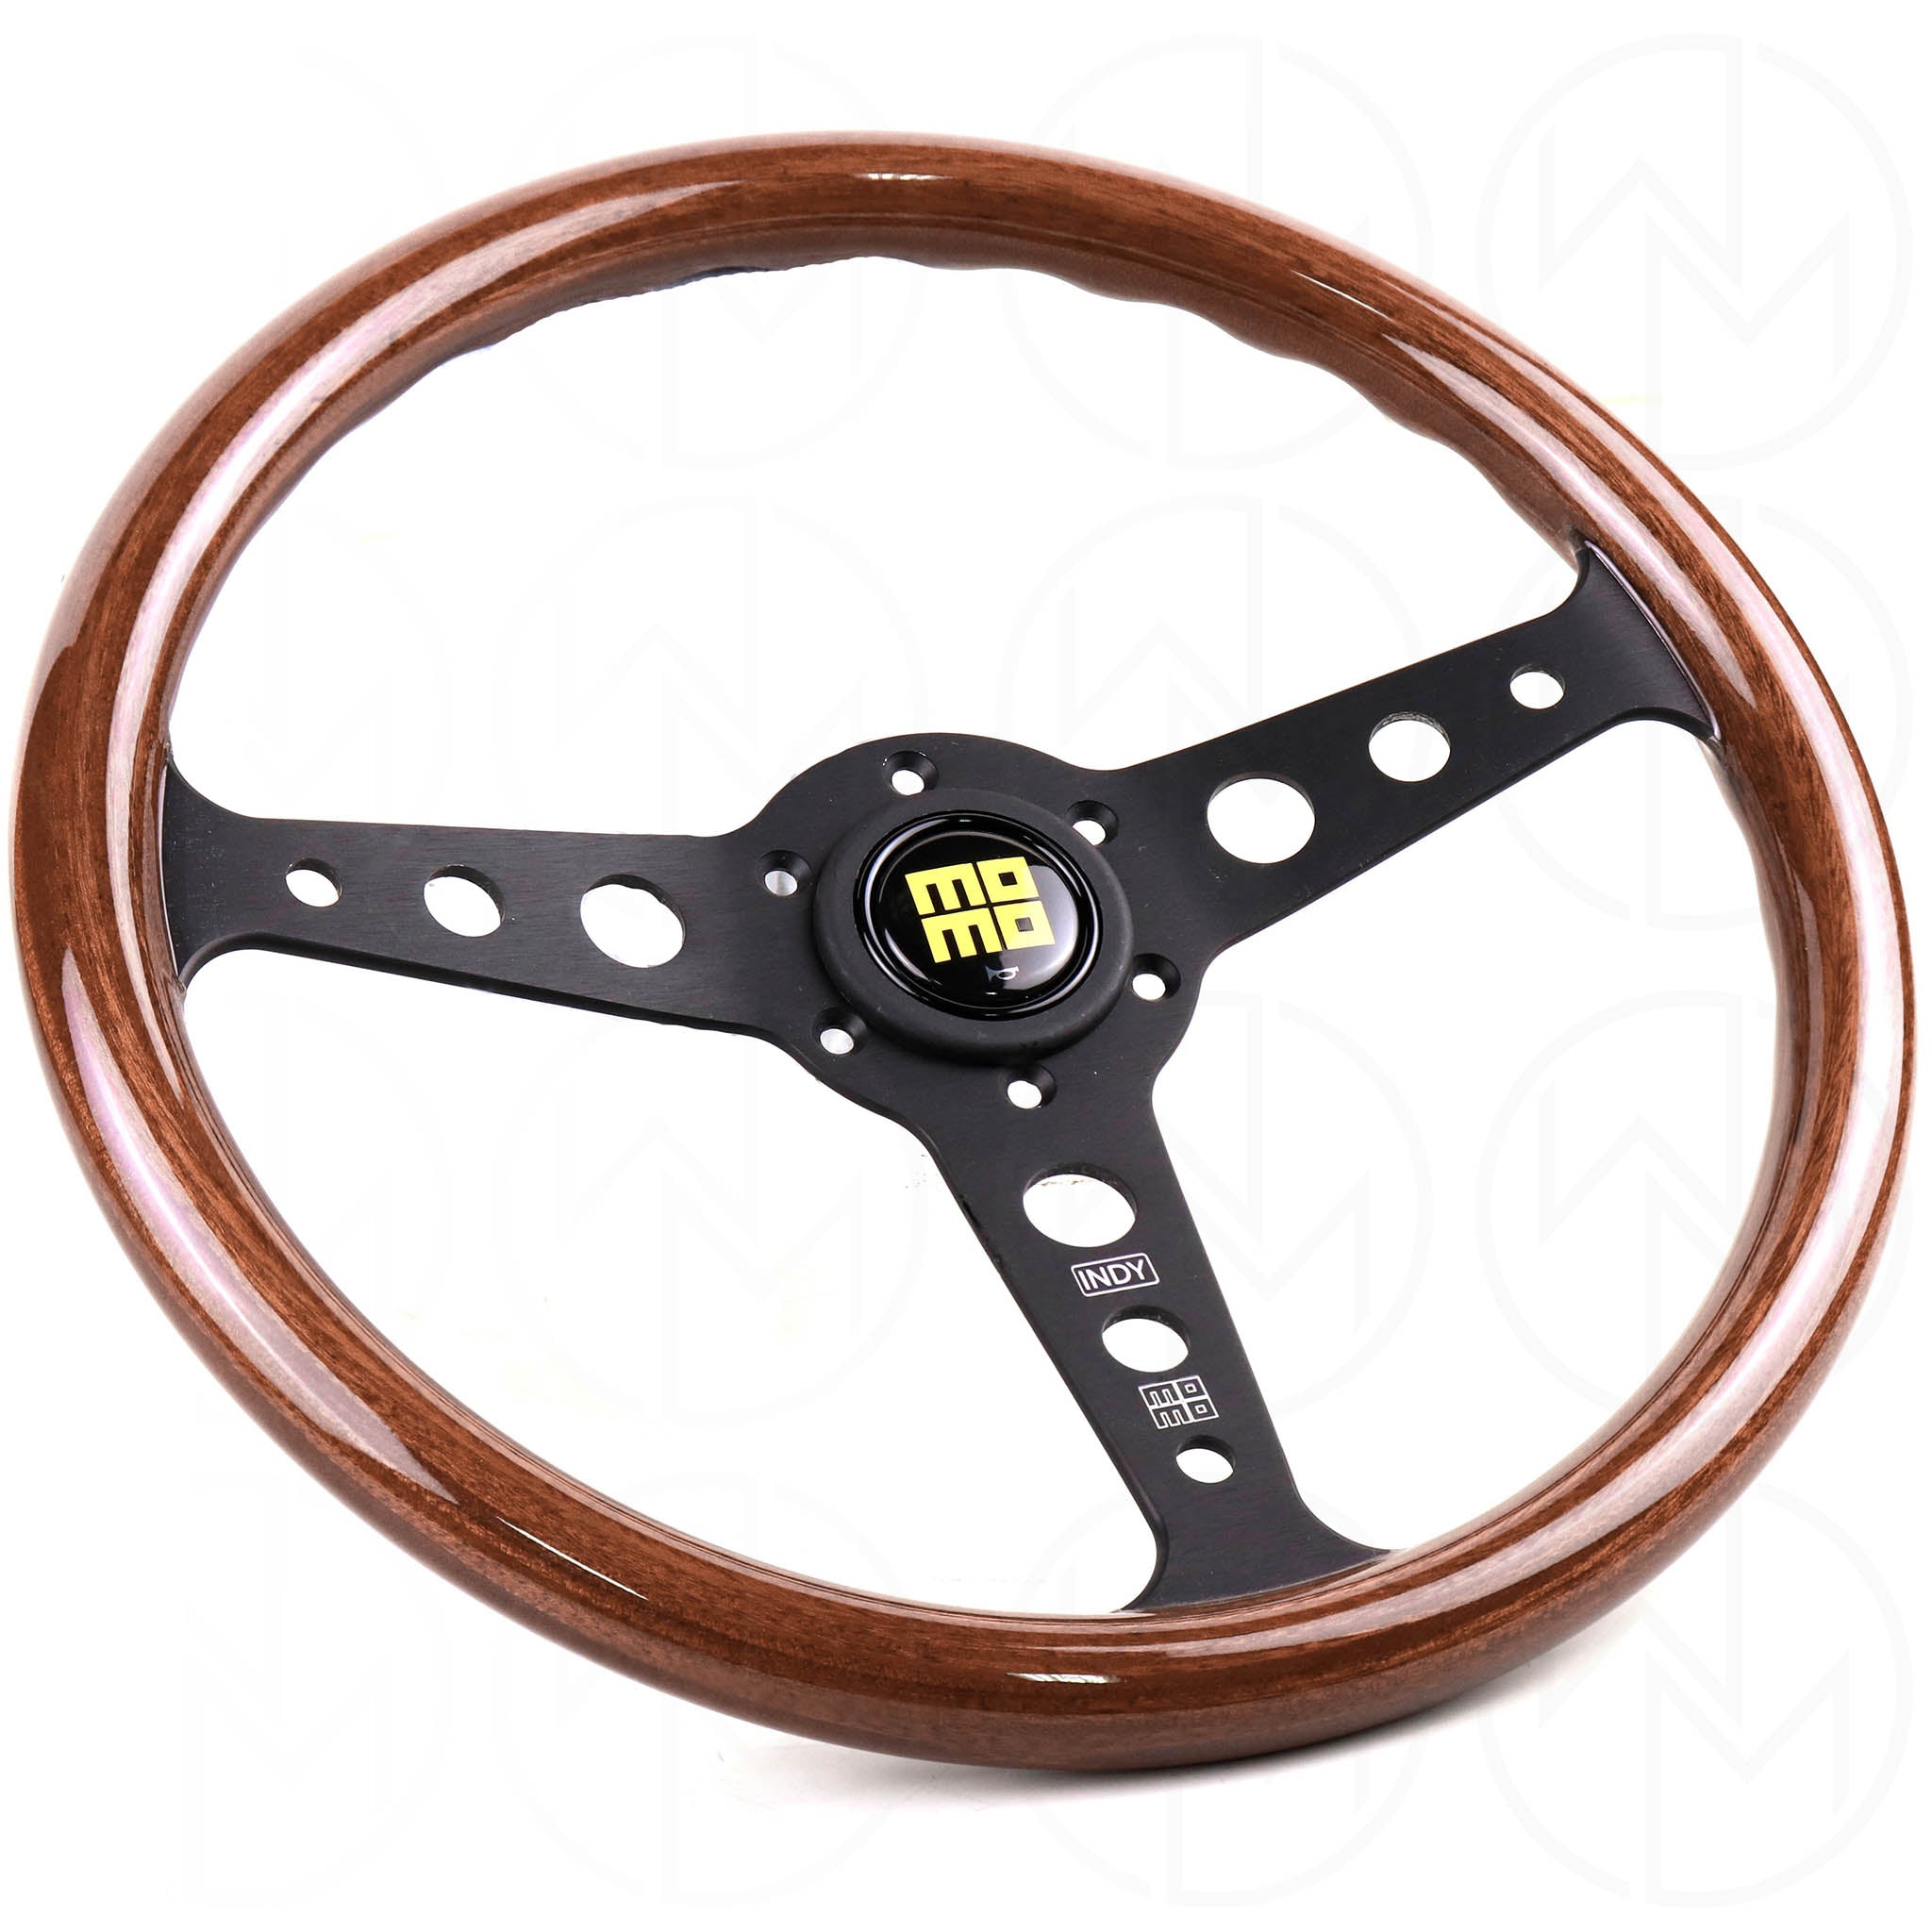 Momo Indy Mahogany Wood 350mm Steering Wheel - Black Spokes